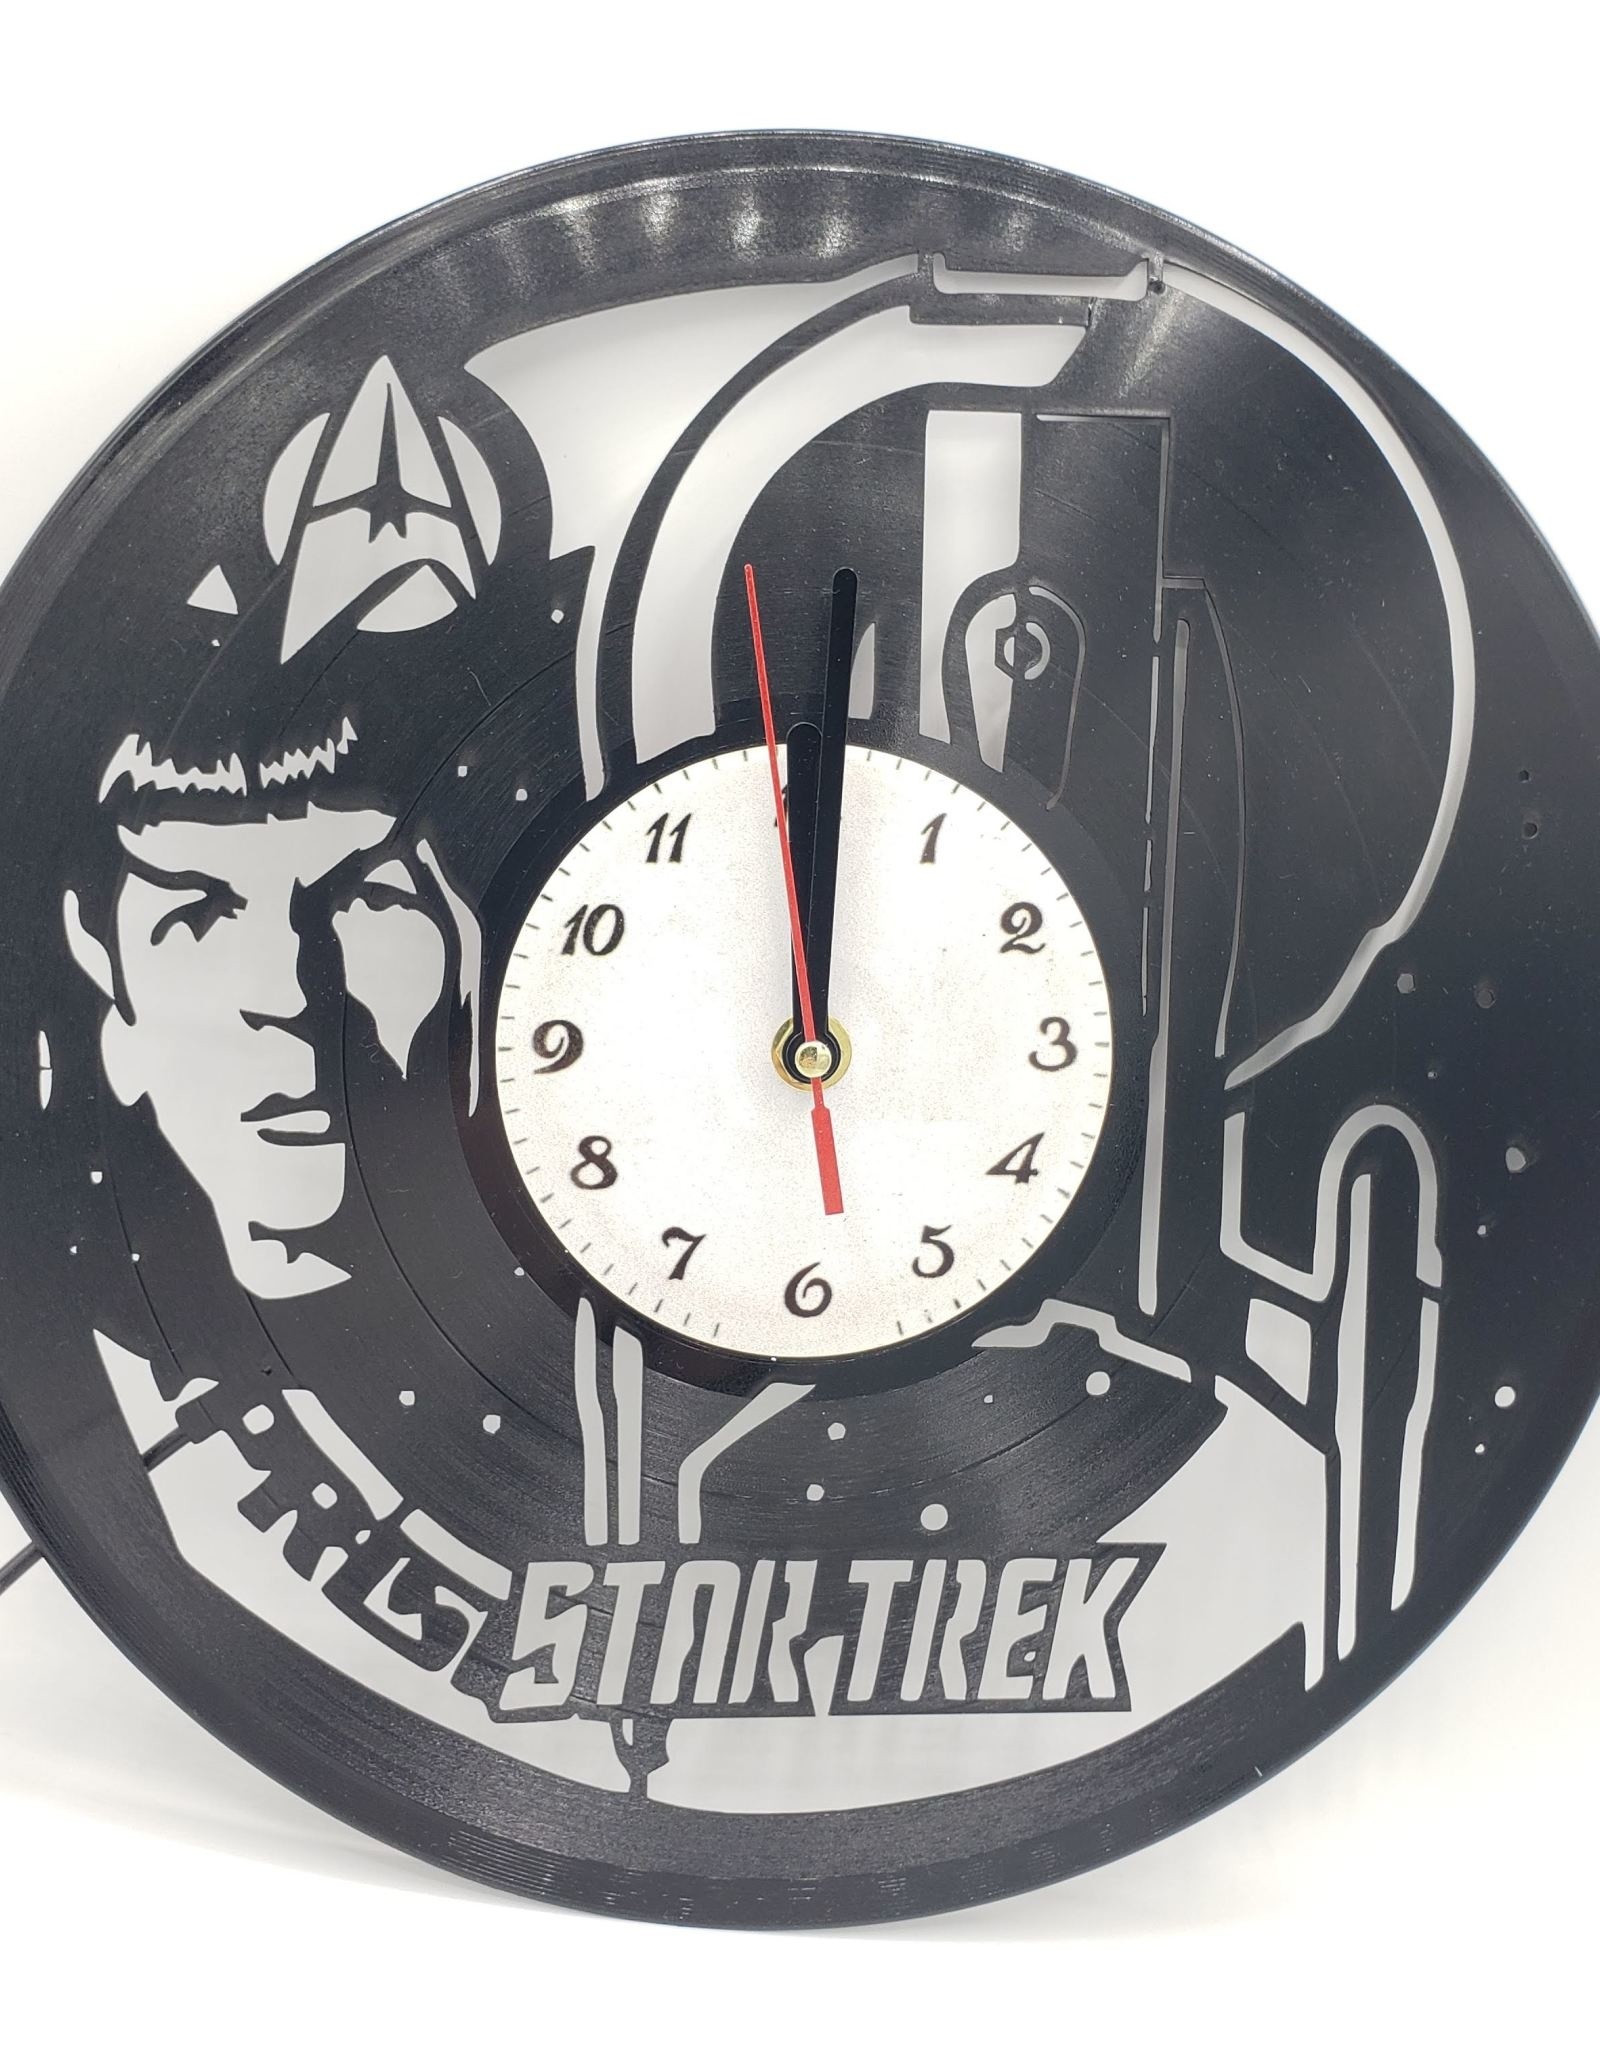 "Star Trek" Upcycled Vinyl Record Clock with LED Backlight